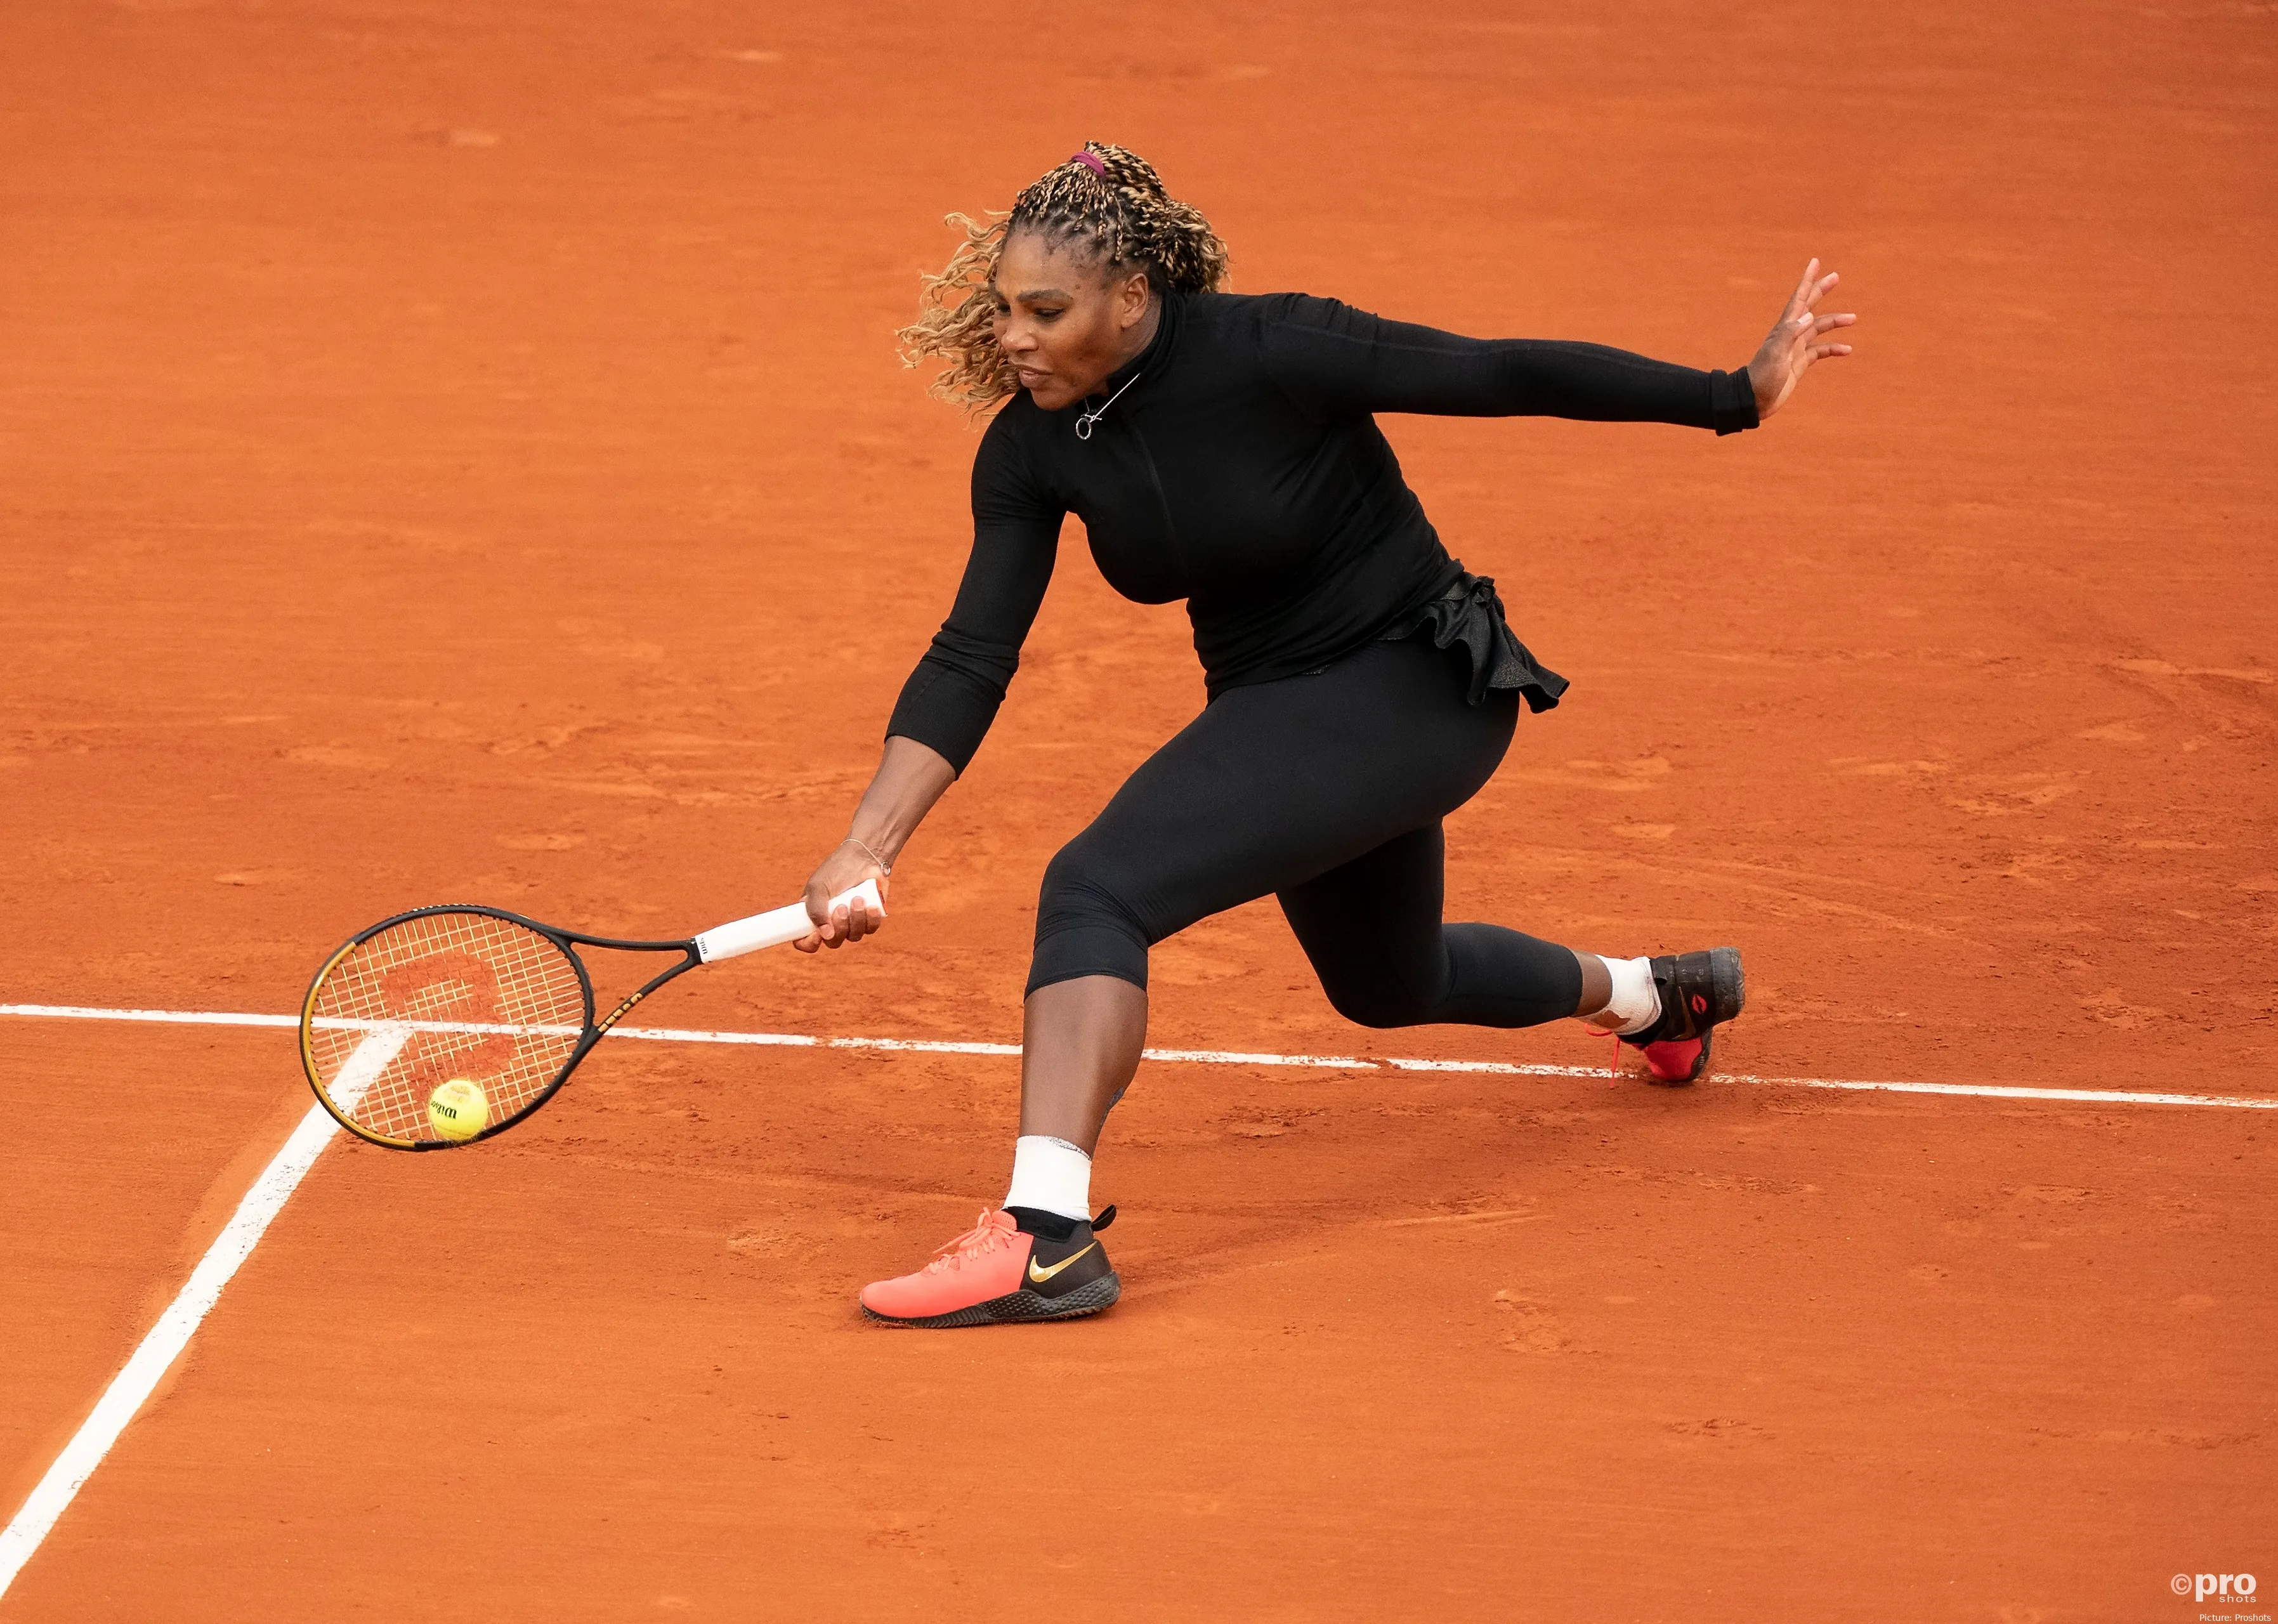 Serena Williams Roland Garros 2020 5f73970a139f8